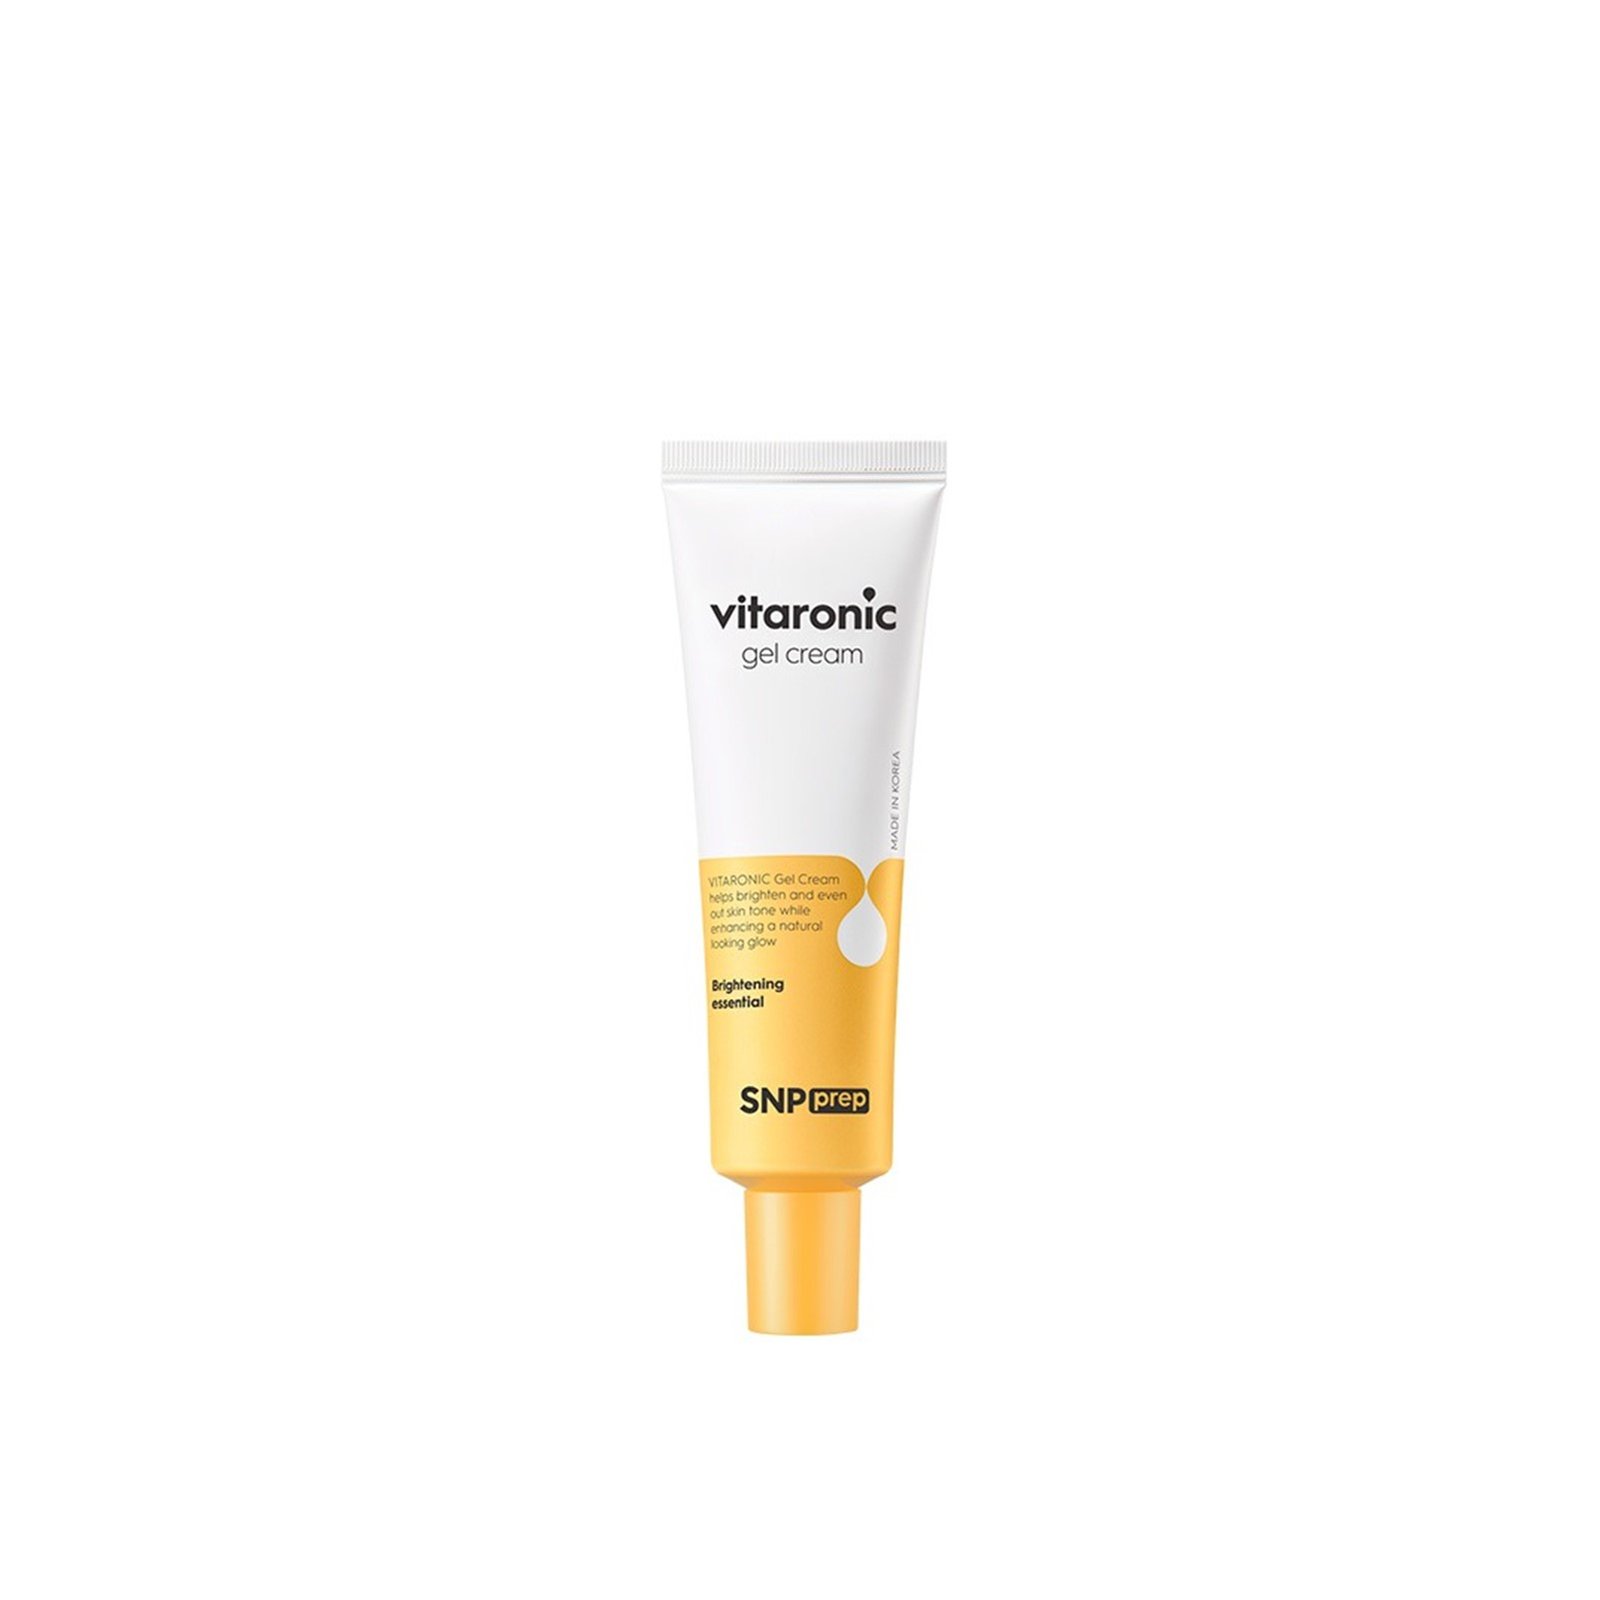 SNP Prep Vitaronic Gel Cream 50ml (1.69 fl oz)